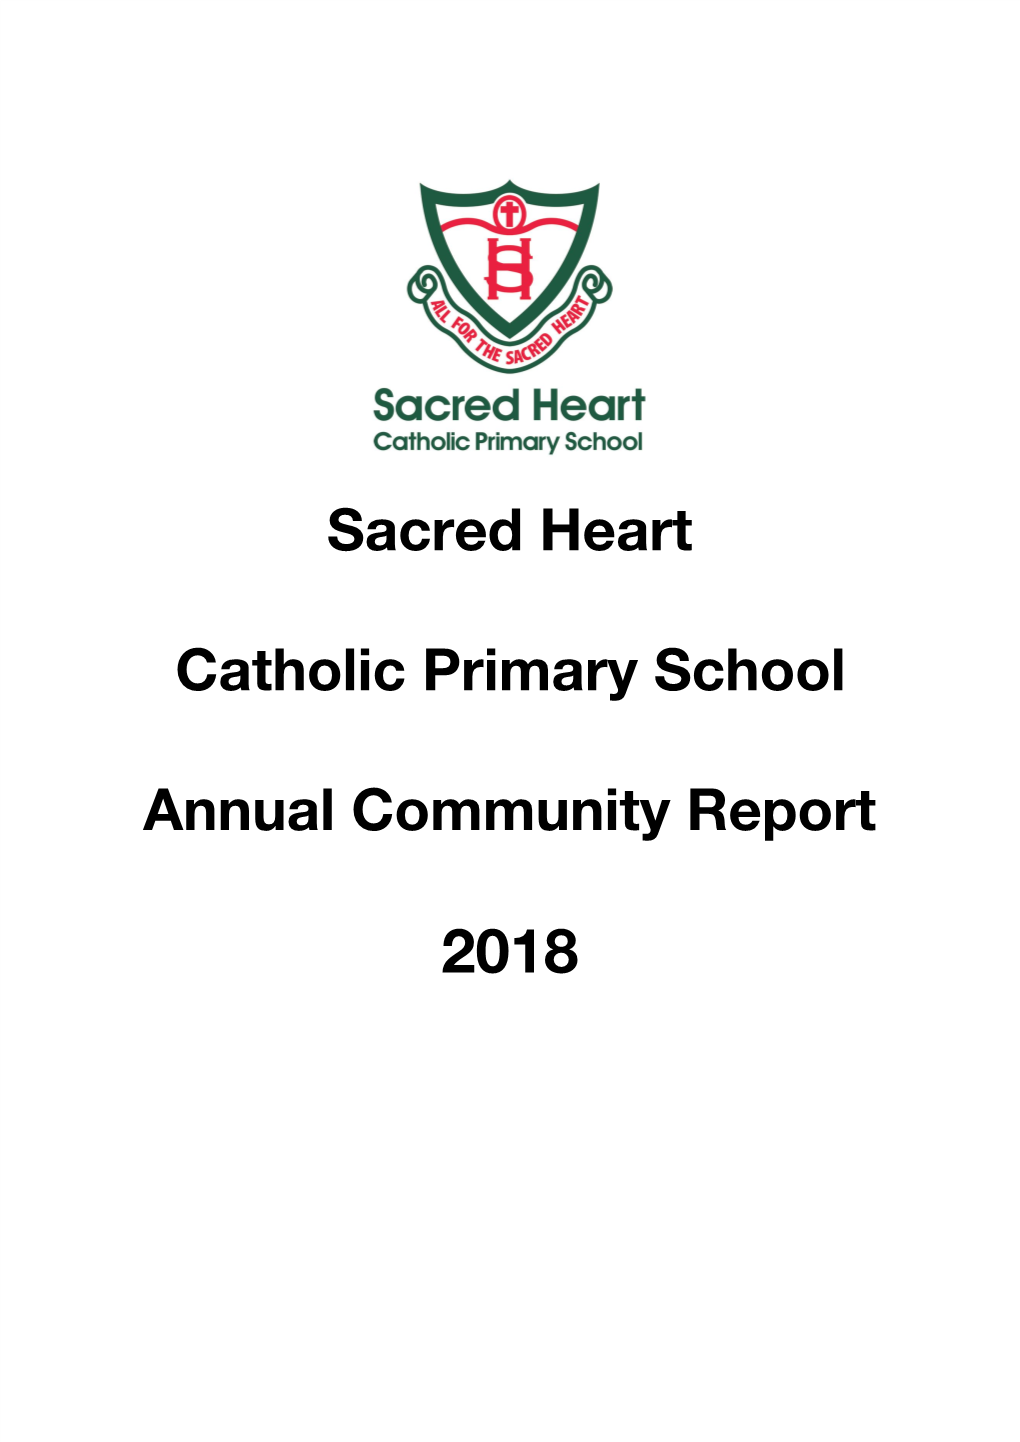 Sacred Heart Catholic Primary School Annual Community Report